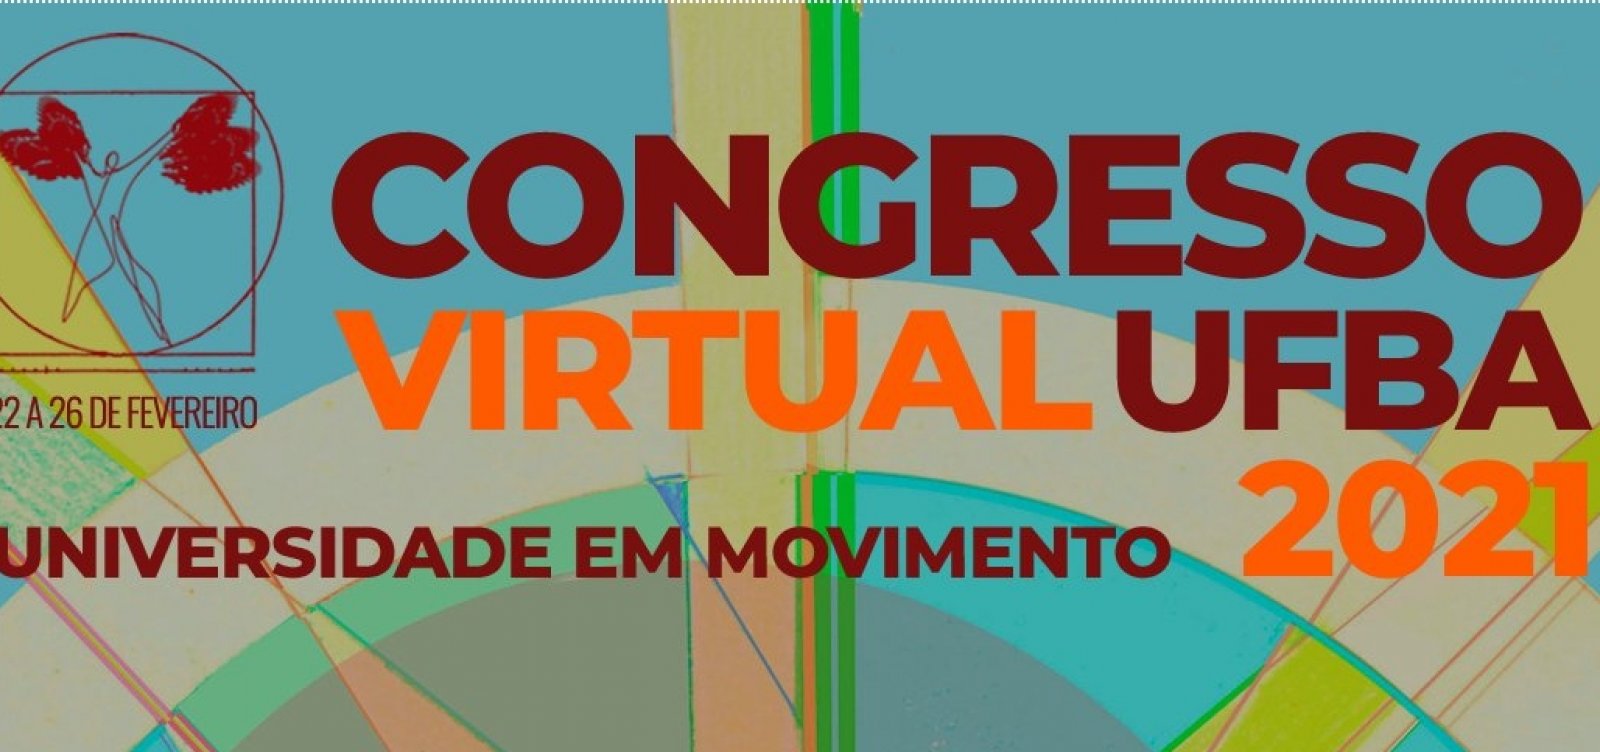 Congresso virtual da Ufba traz debates sobre cultura, política e meio ambiente